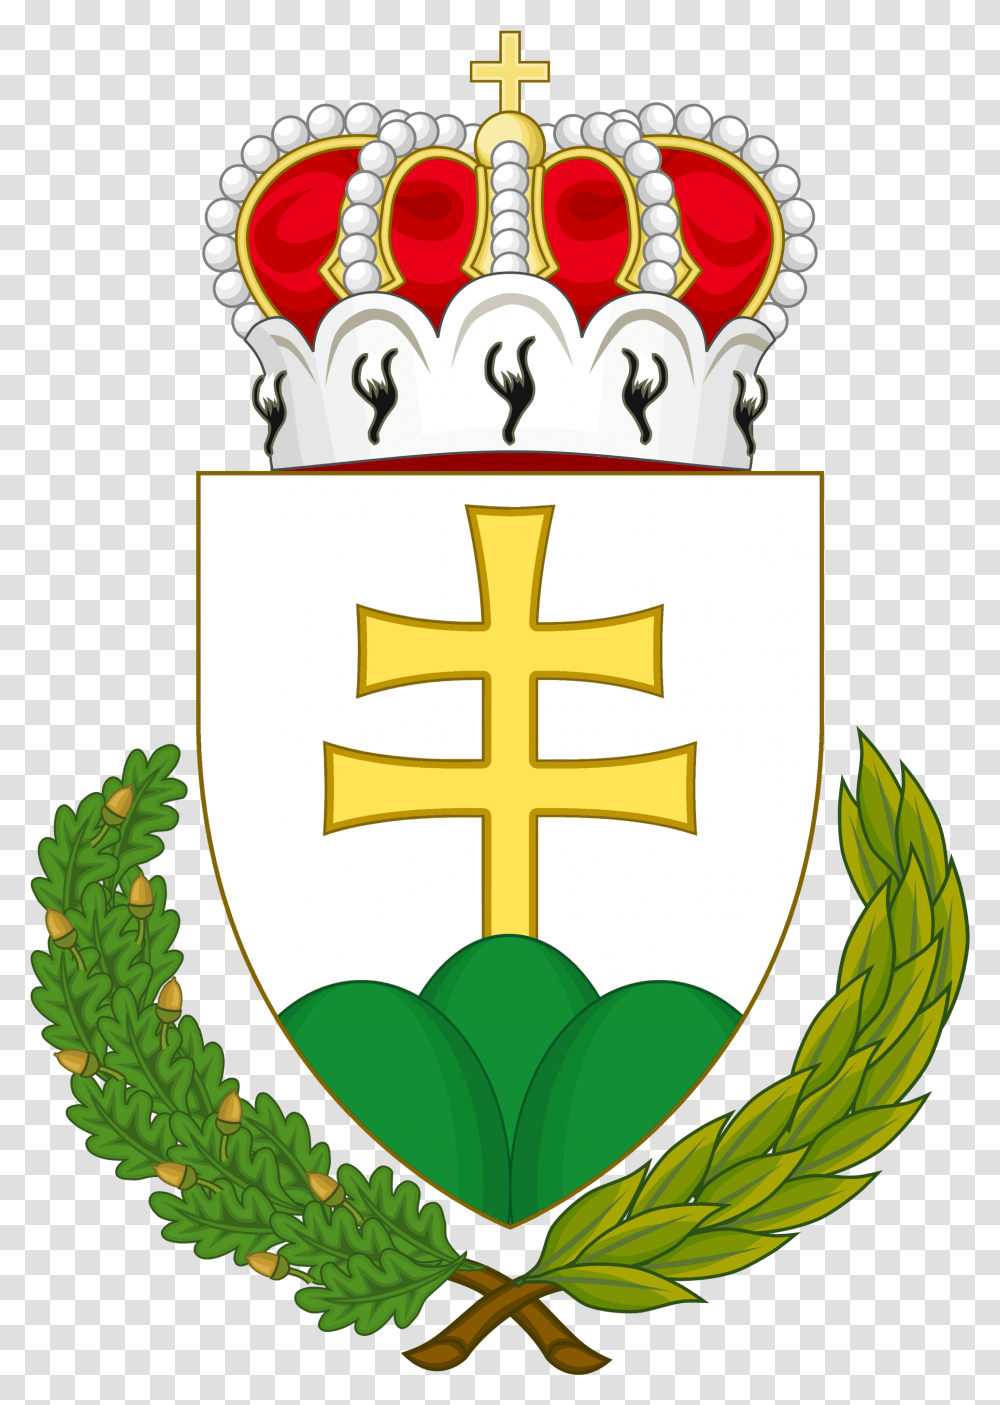 Coa Grandduchy Of Slovakia Peerage Of England, Armor, Shield, Cross Transparent Png